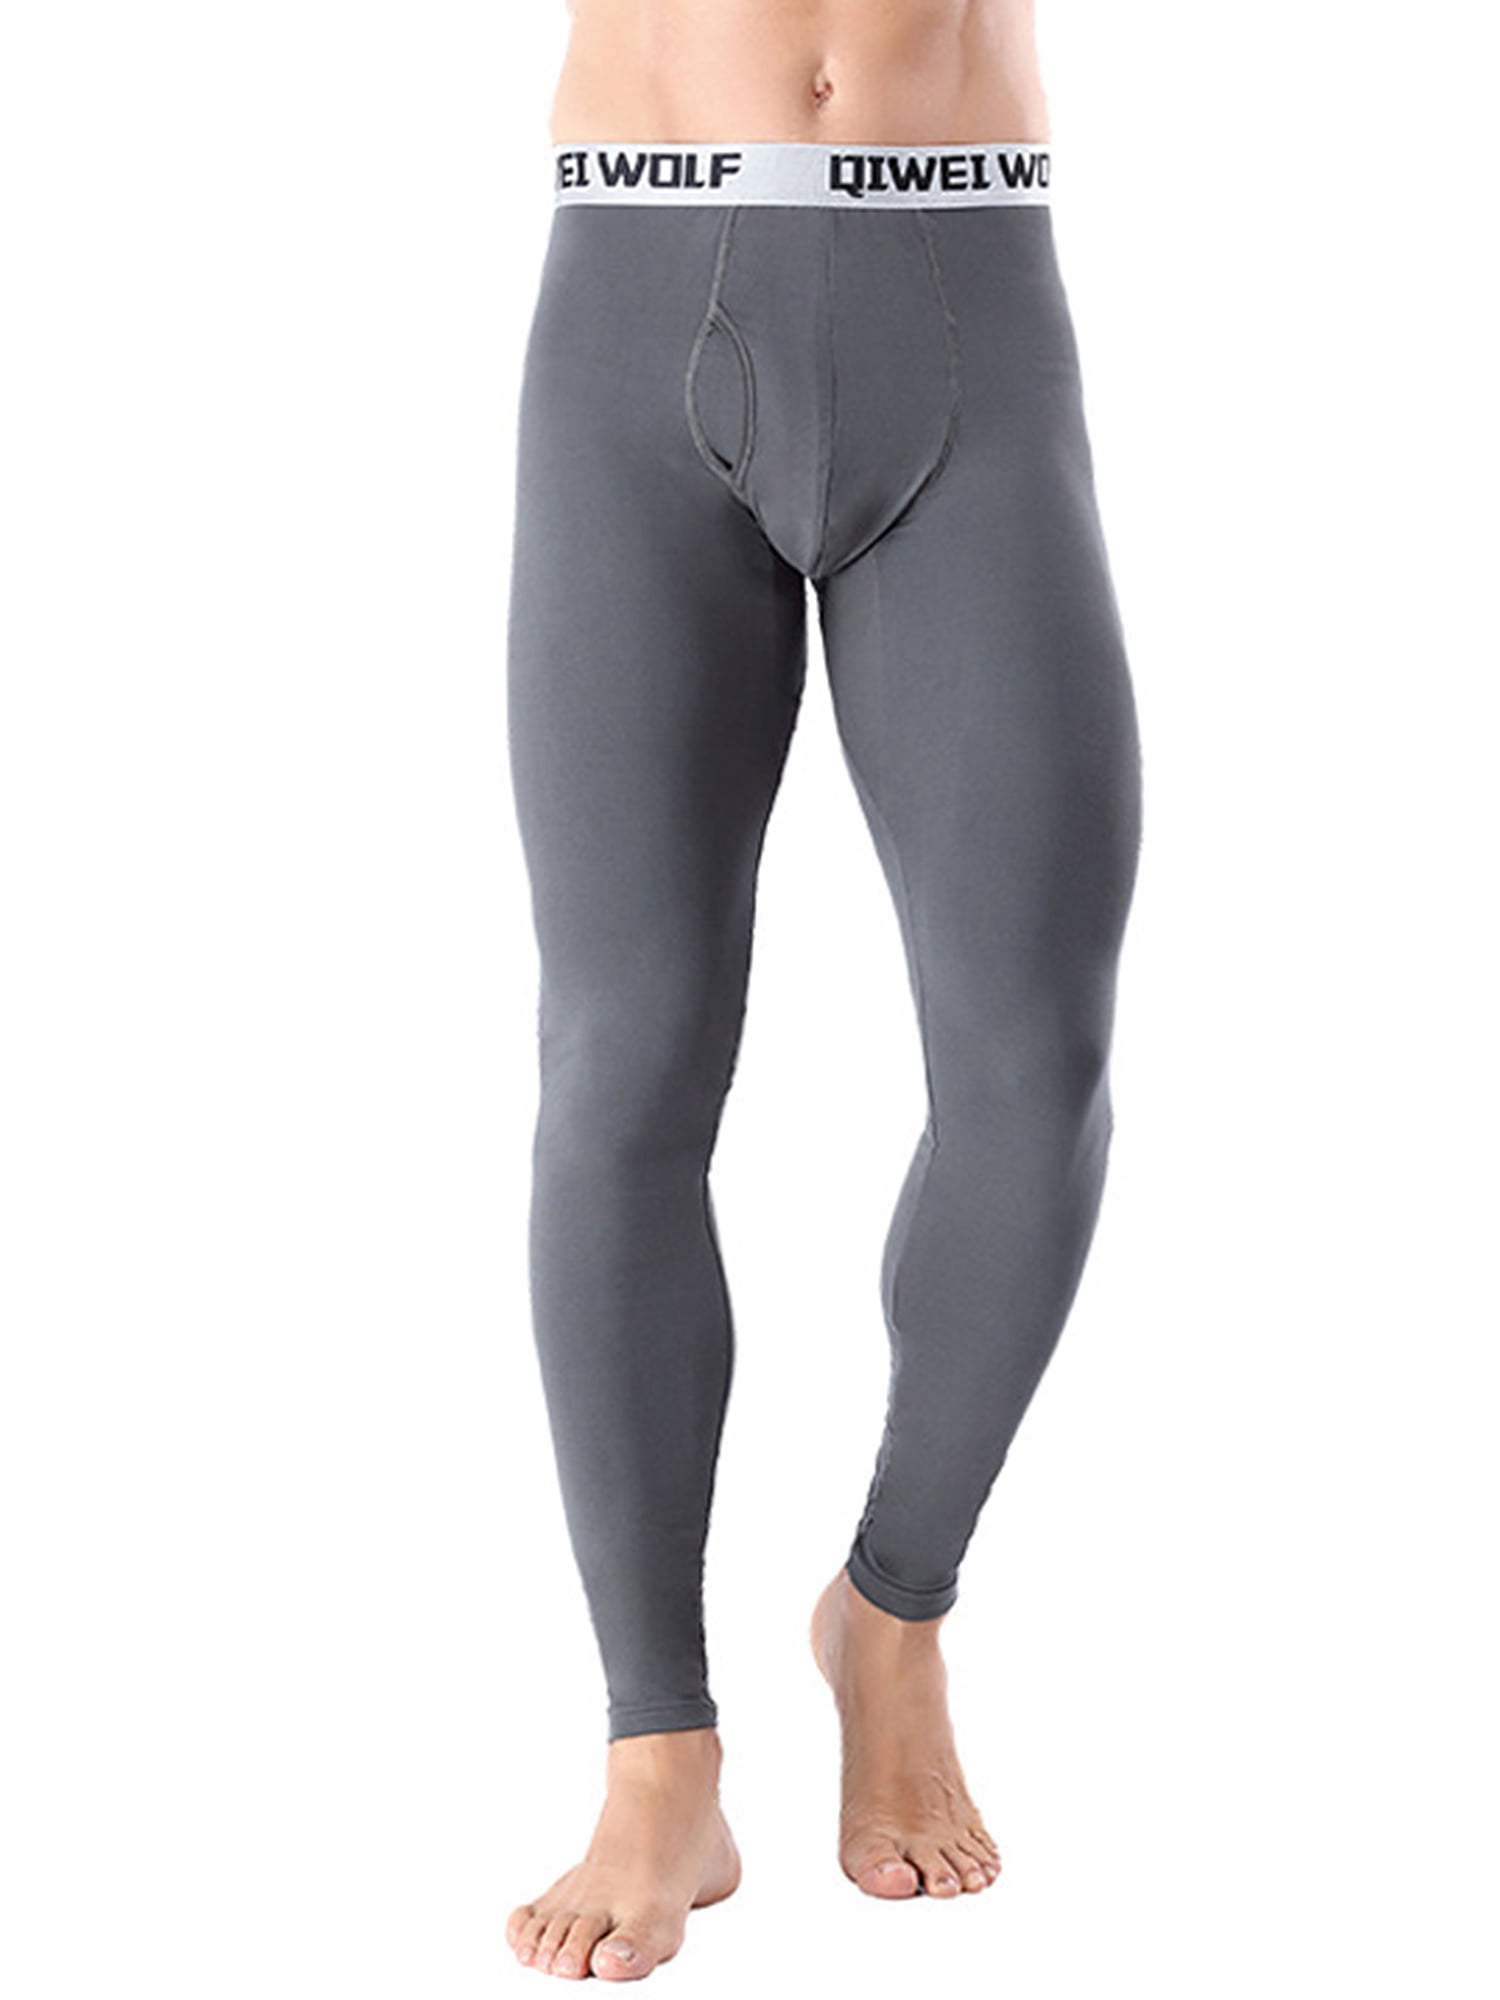 Men Compression Pants Base Layer Skin Tights Running YOGA Workout Gym Sports Hot 